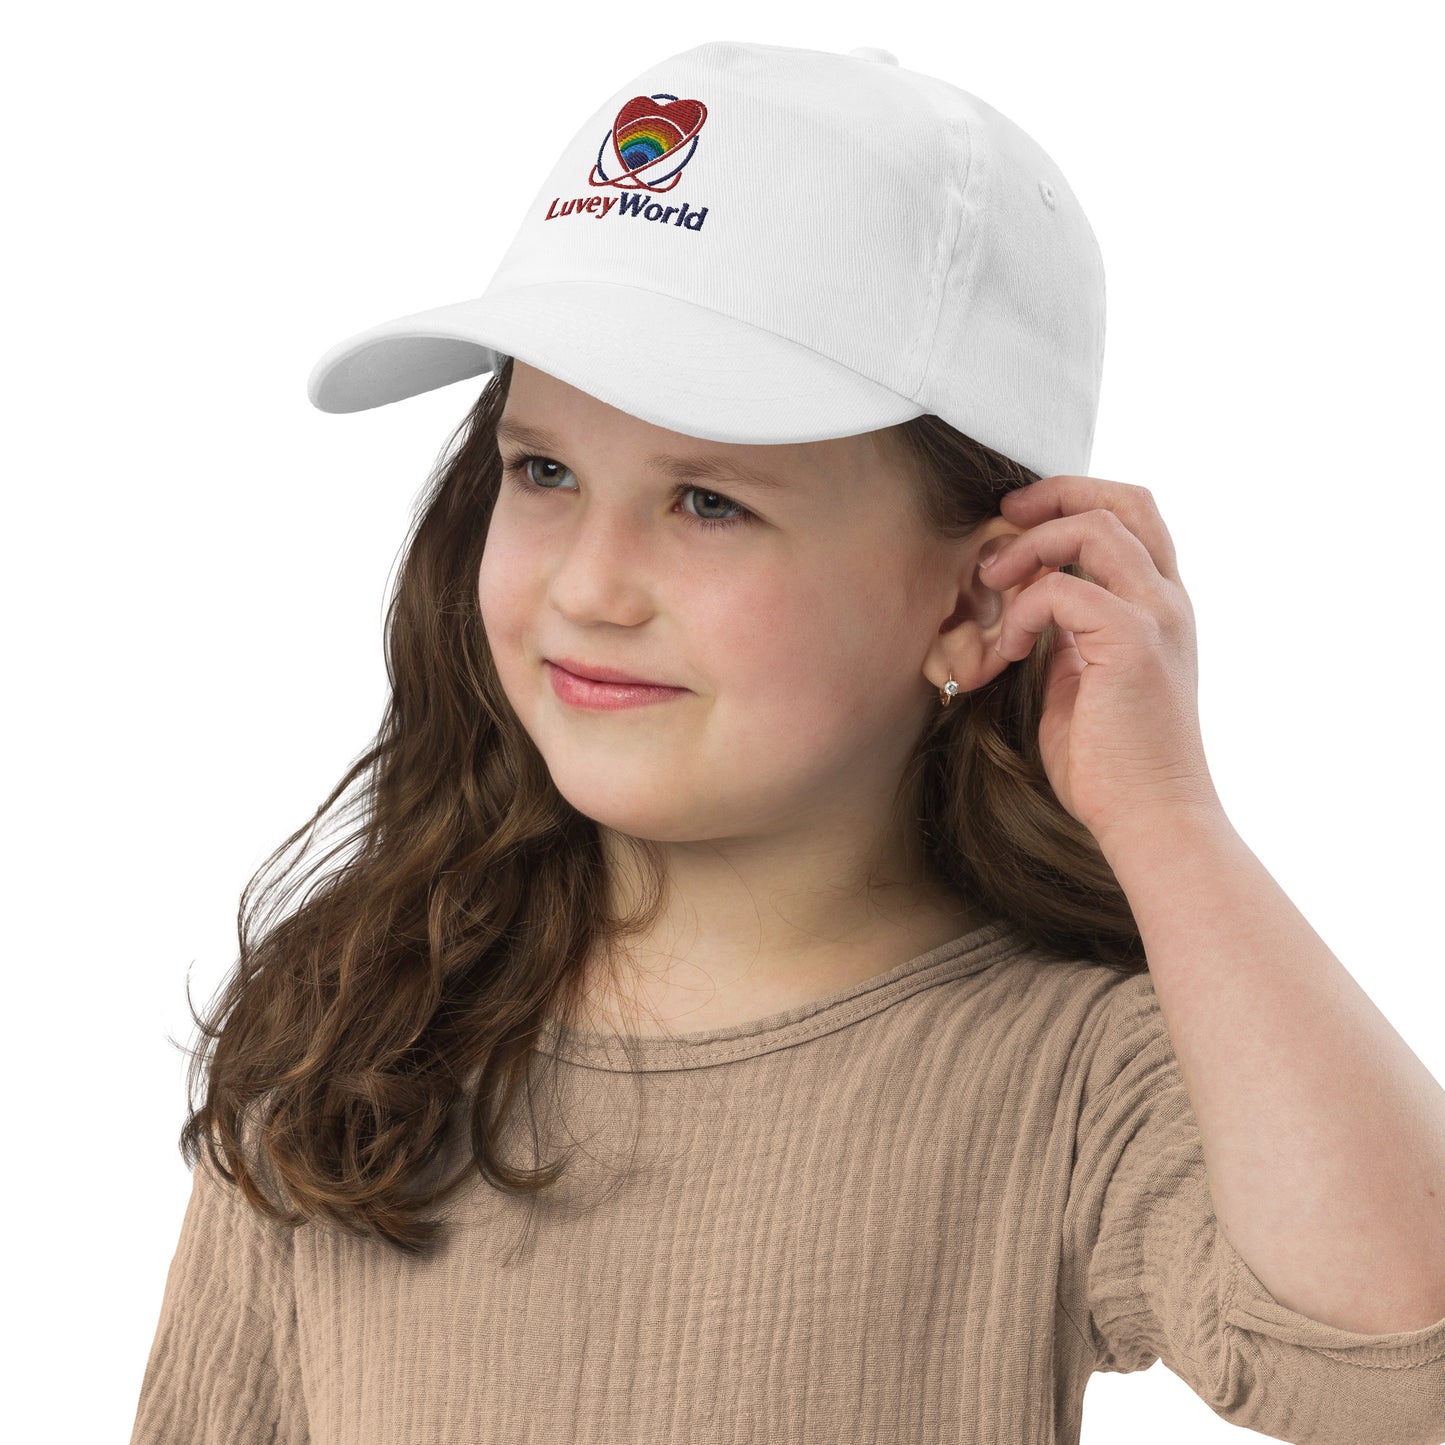 LuveyWorld Kids cap